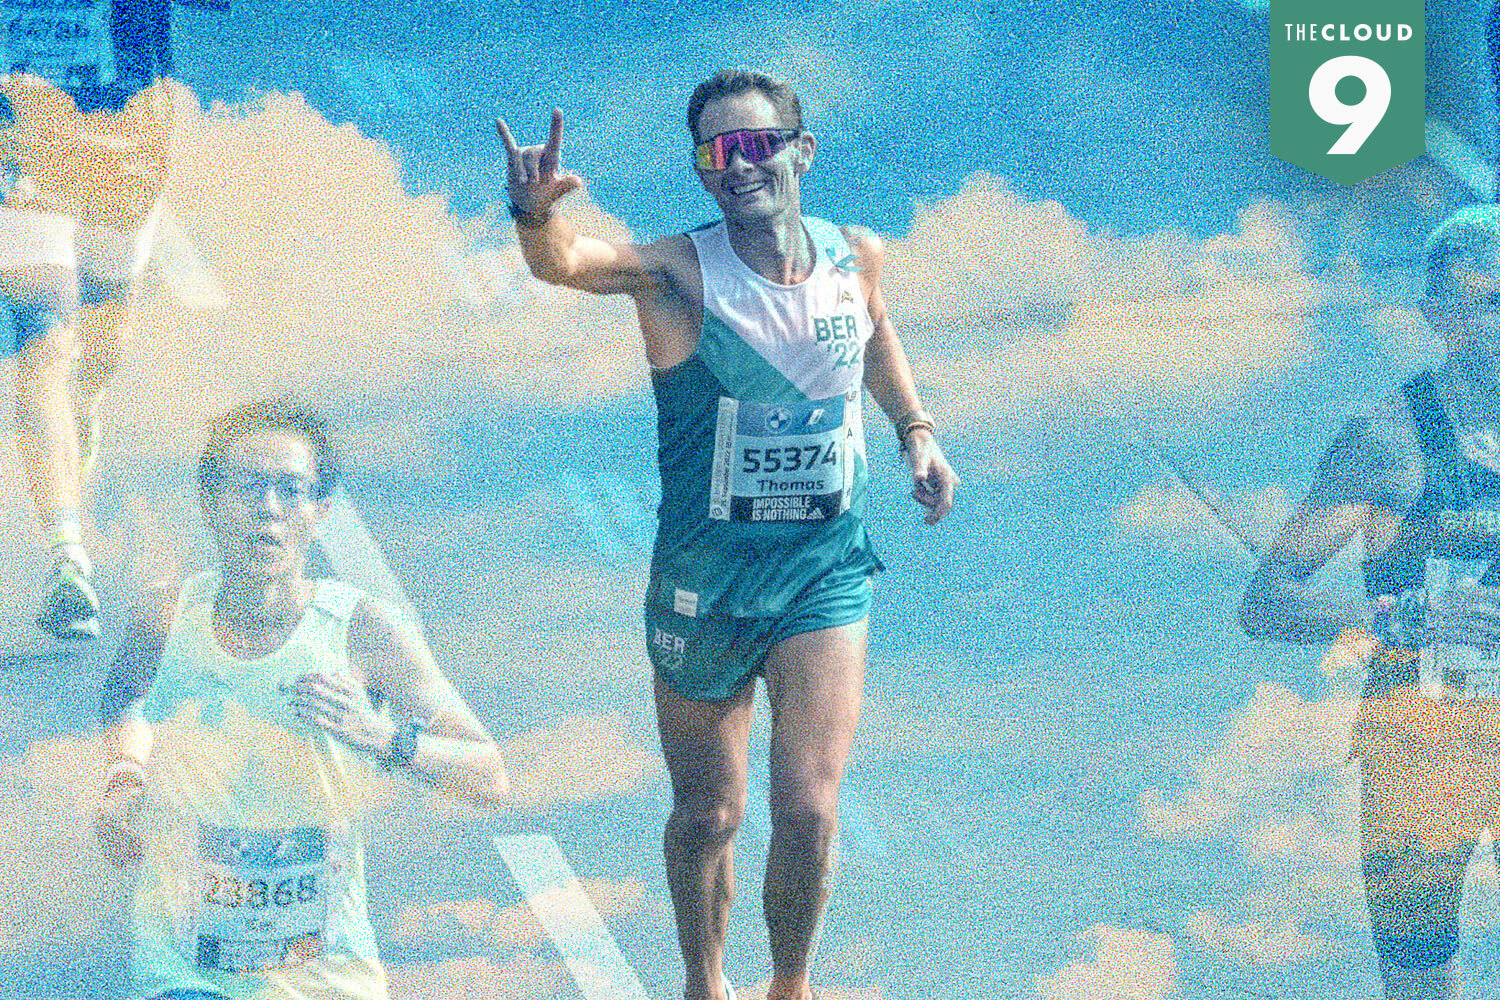 A photo of German marathoner Thomas Eller against a background of blue skies.